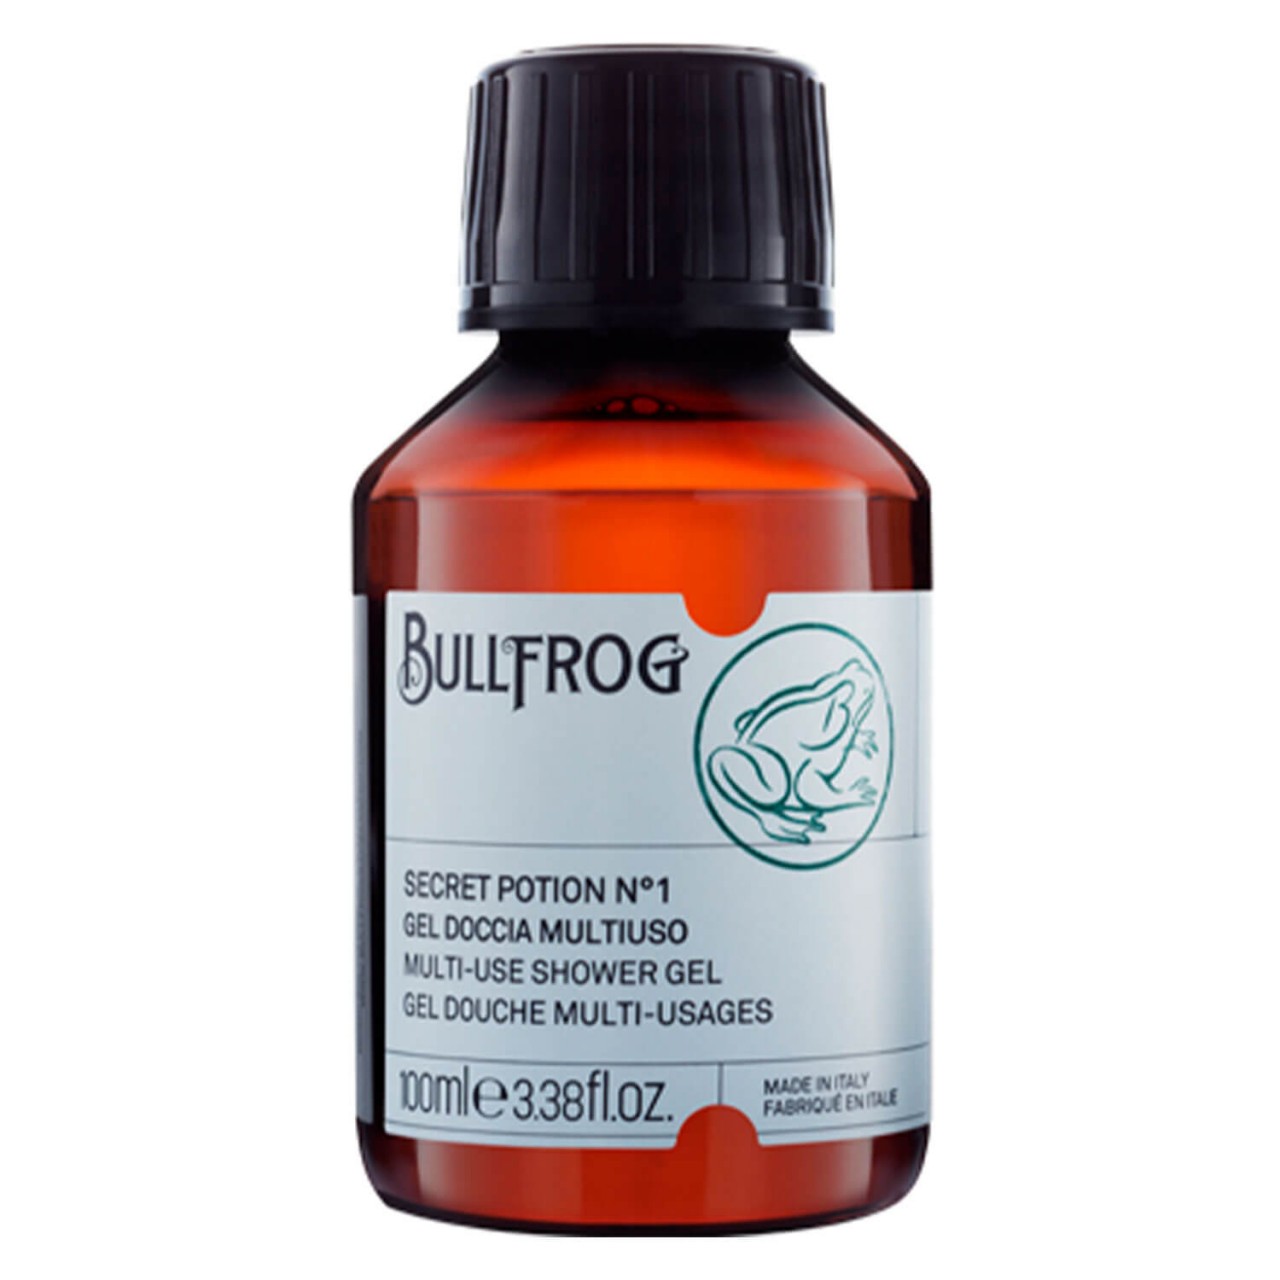 BULLFROG - Multi-Use Shower Gel Secret Potion N°1 von BULLFROG